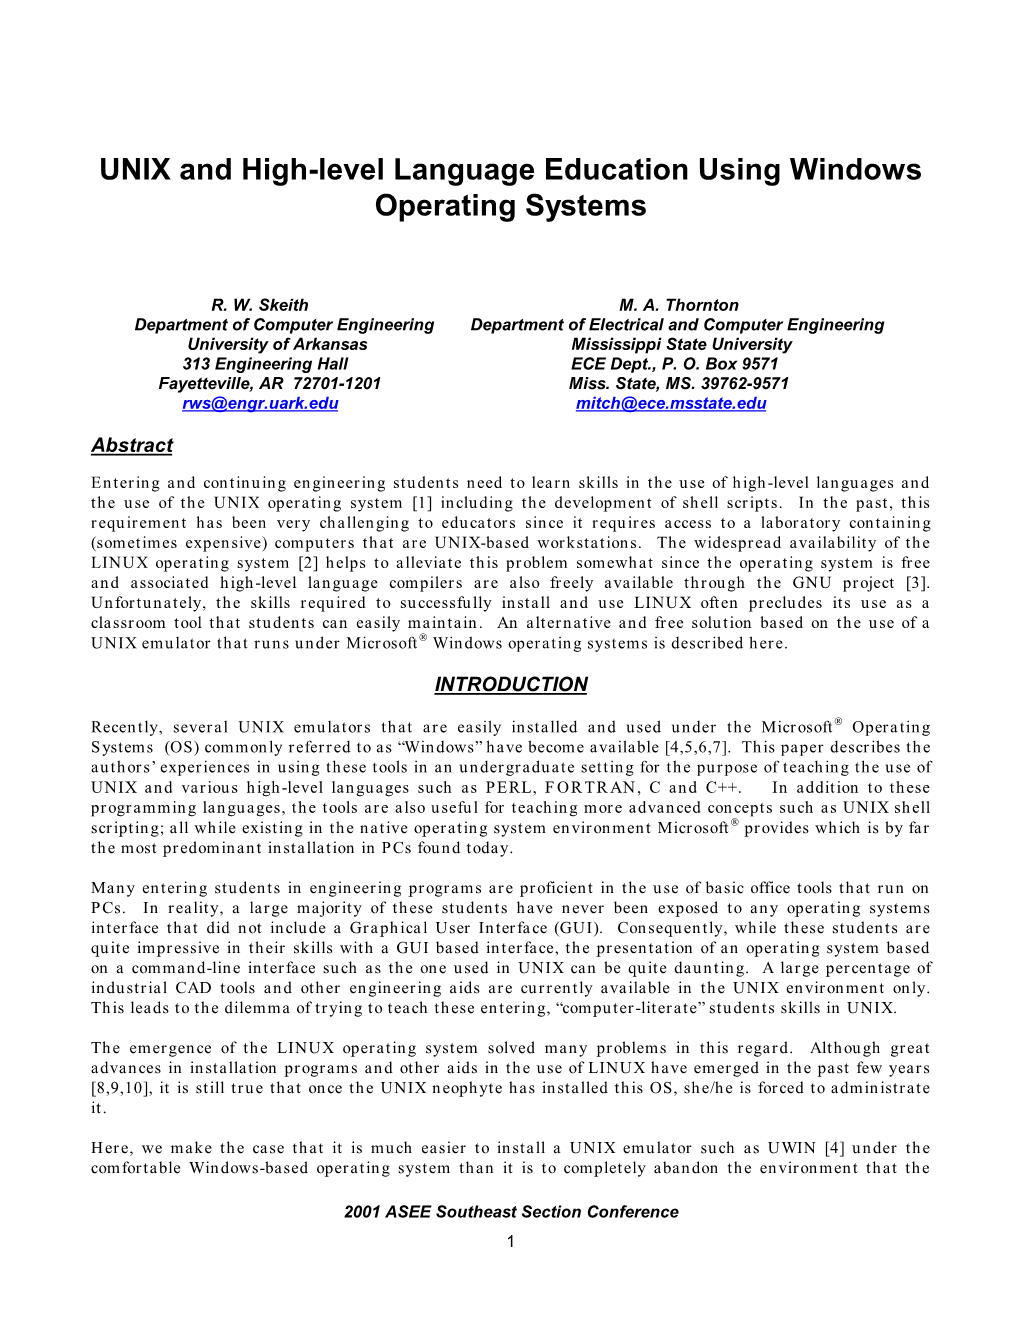 UNIX and High-Level Language Education Using Windows Operating Systems